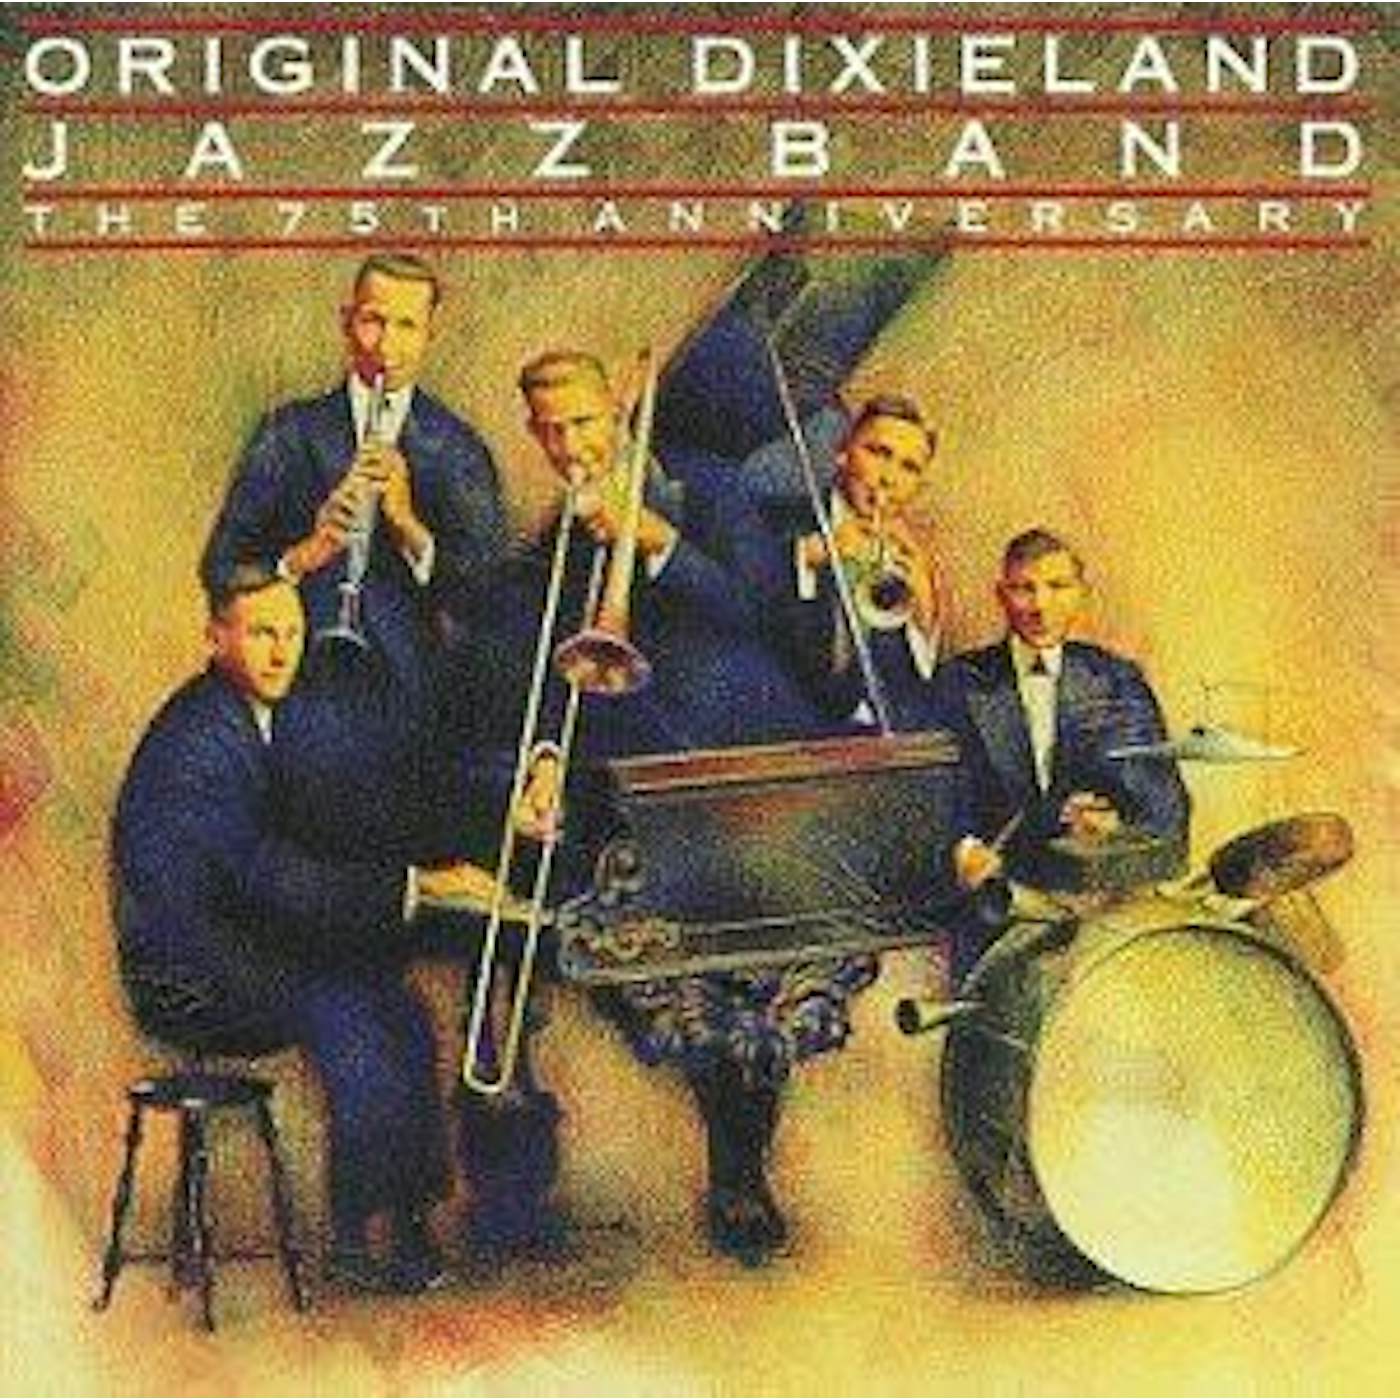 Original Dixieland Jazz Band 75TH ANNIVERSARY CD